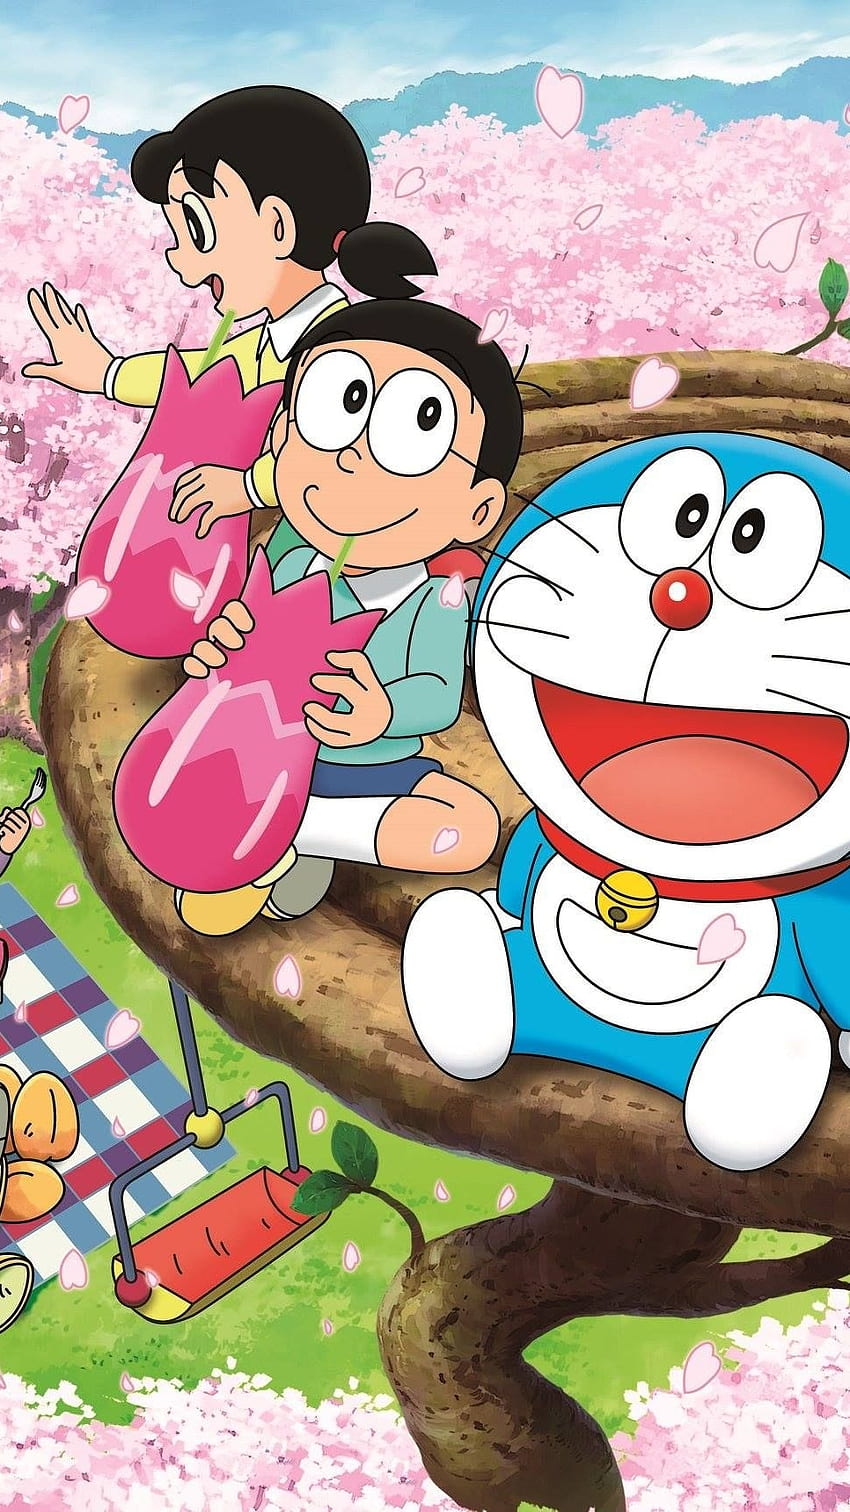 Wallpaper on Twitter Doraemon posing with nobita doraemon cartoon posing  with nobita The Mobile Wallpapers httpstcoXfohPpZYtI  httpstcowjXcxXpez9  Twitter